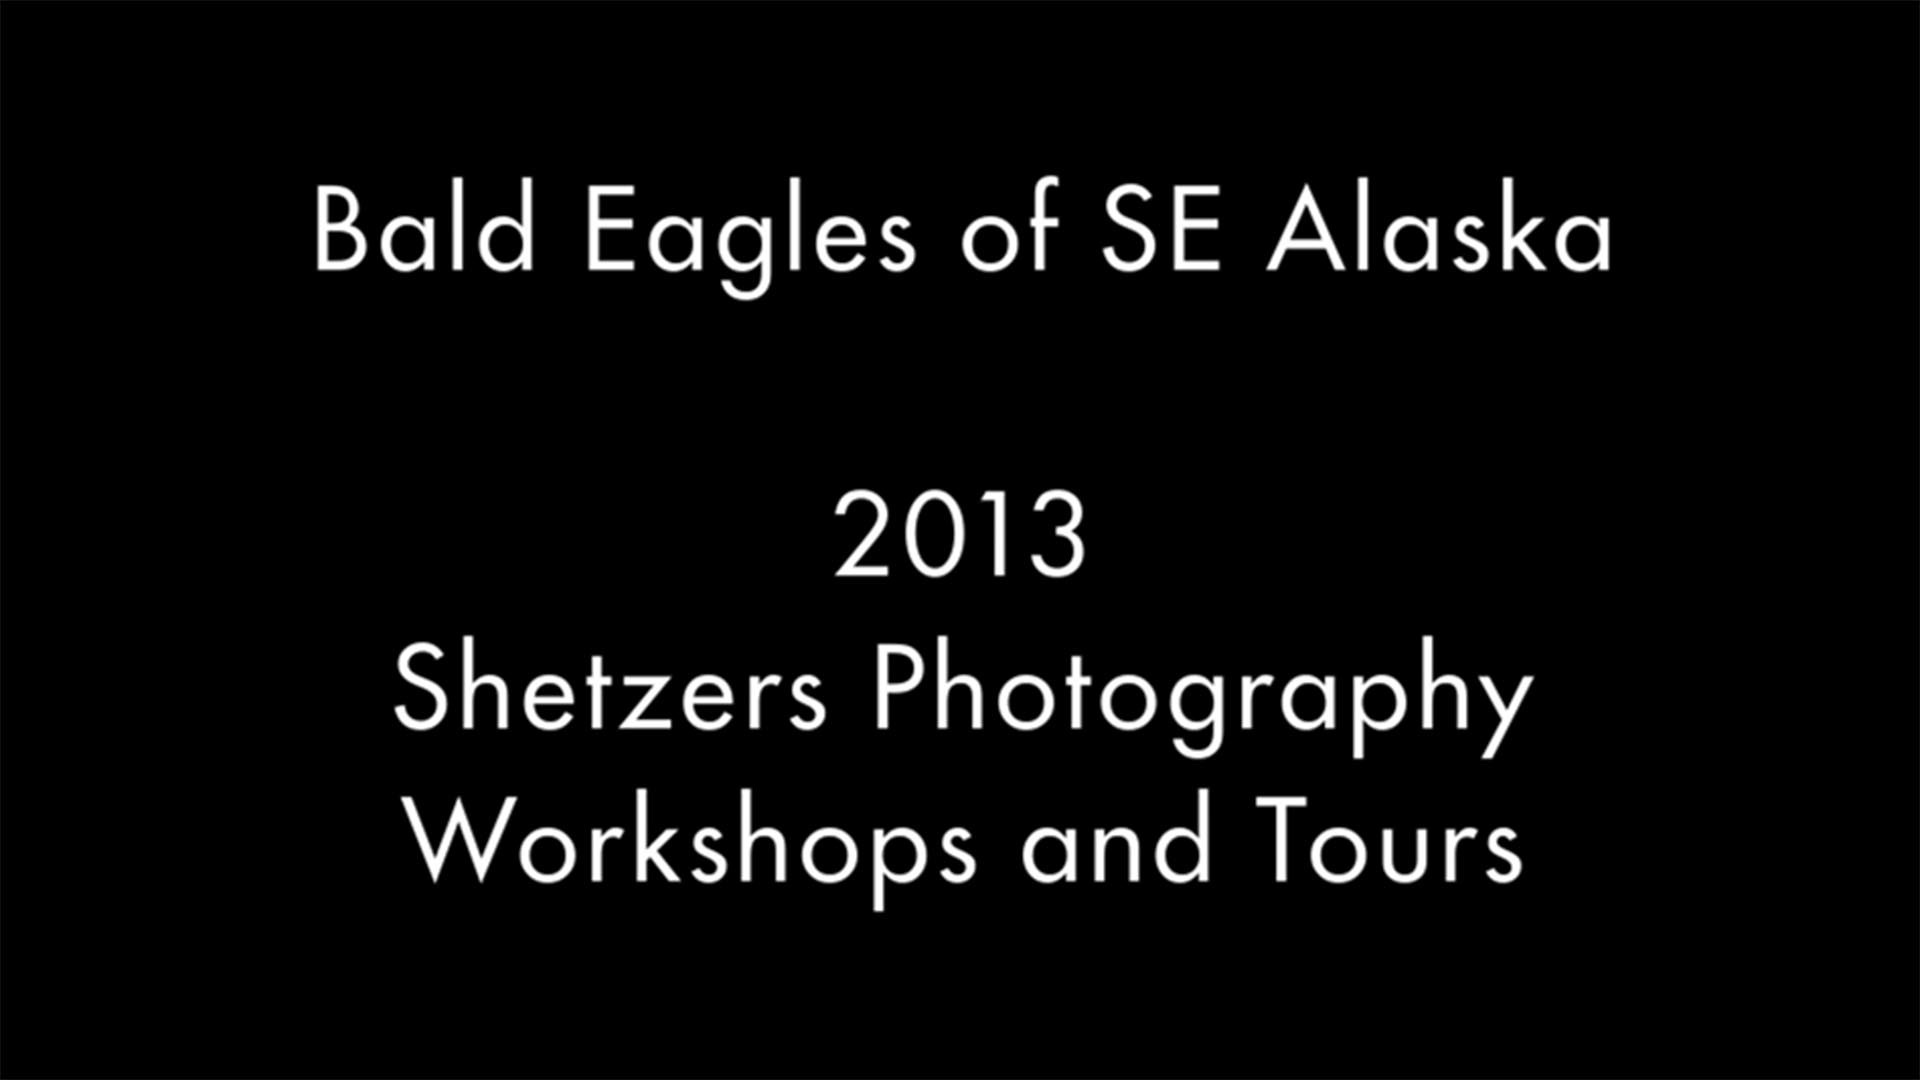 Bald Eagles of SE Alaska 2013